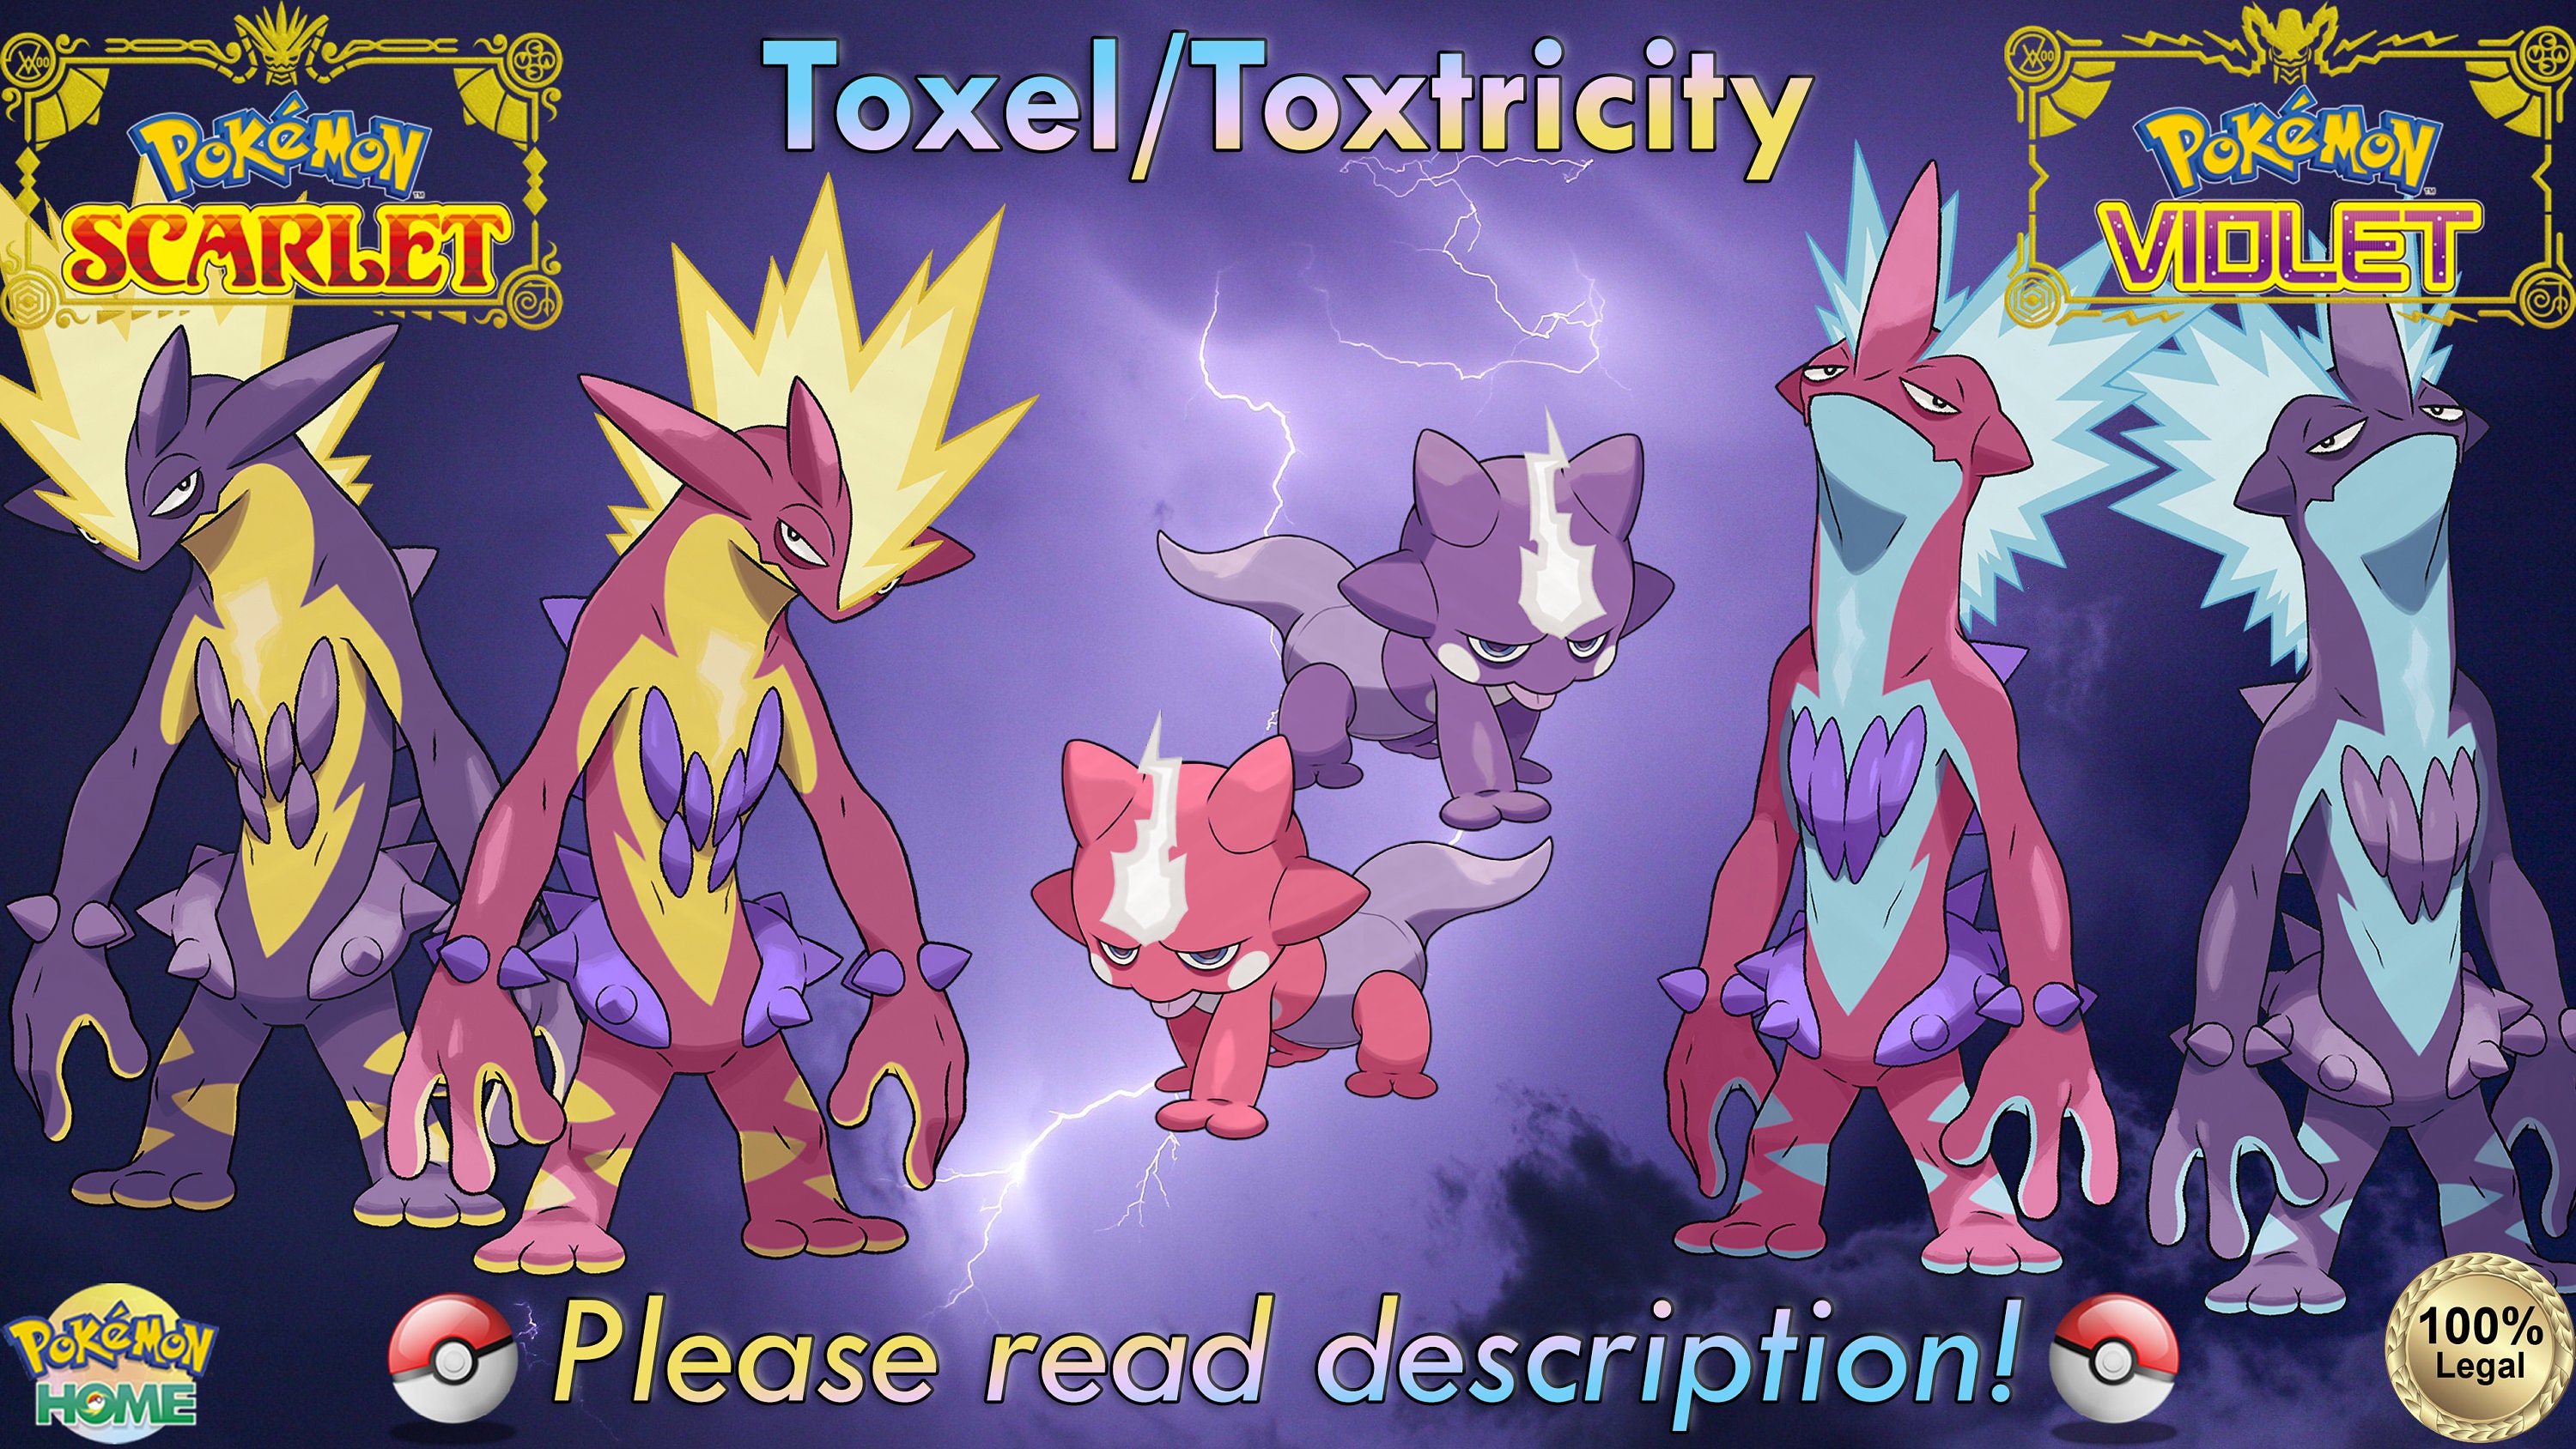 Pokémon Scarlet and Violet/ Rare Shiny Giratina/ 6IV / Level -  Hong  Kong